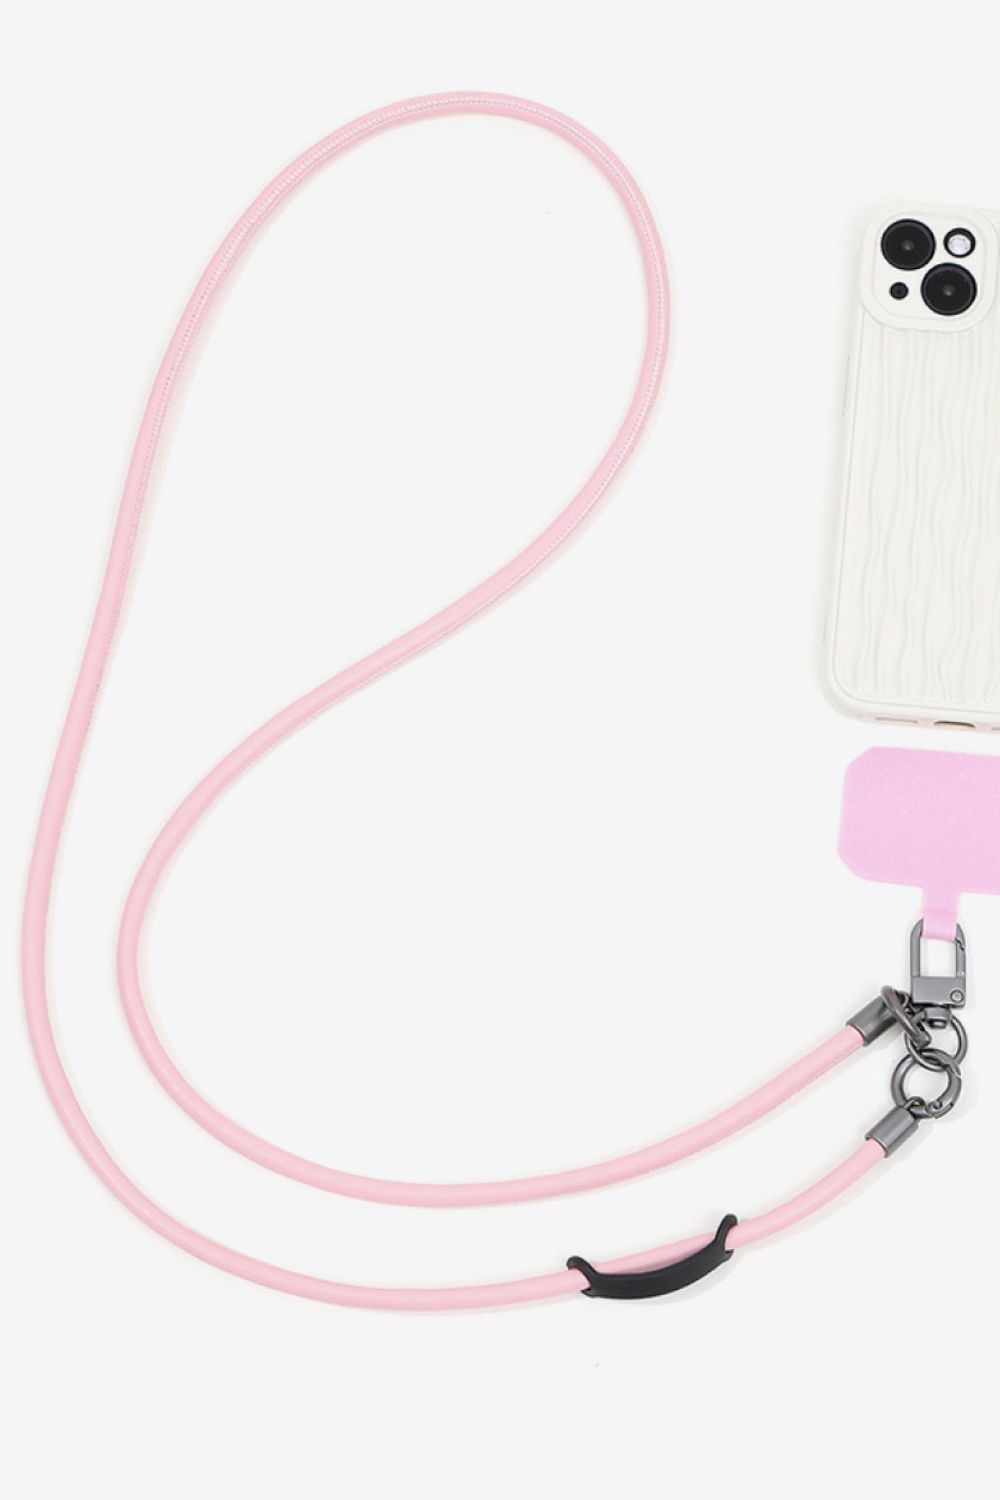 Trendsi Cupid Beauty Supplies Blush Pink / One Size Keychains PU Phone Lanyard